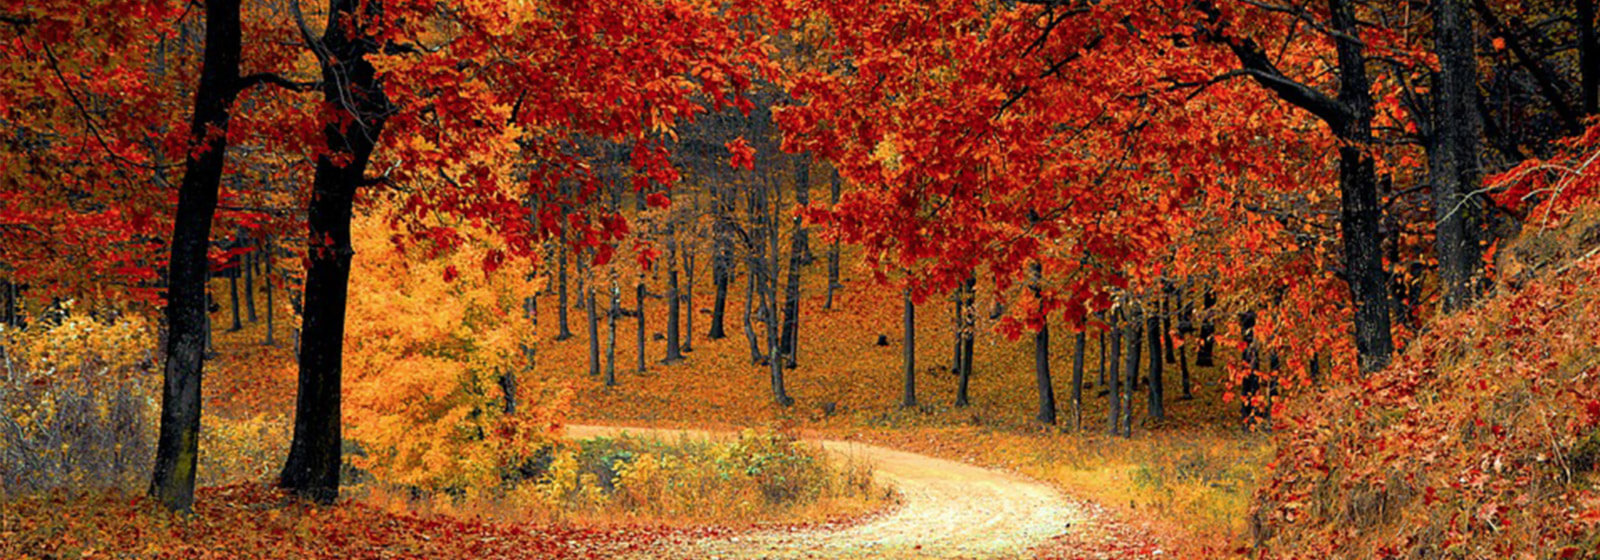 fall trees image slide